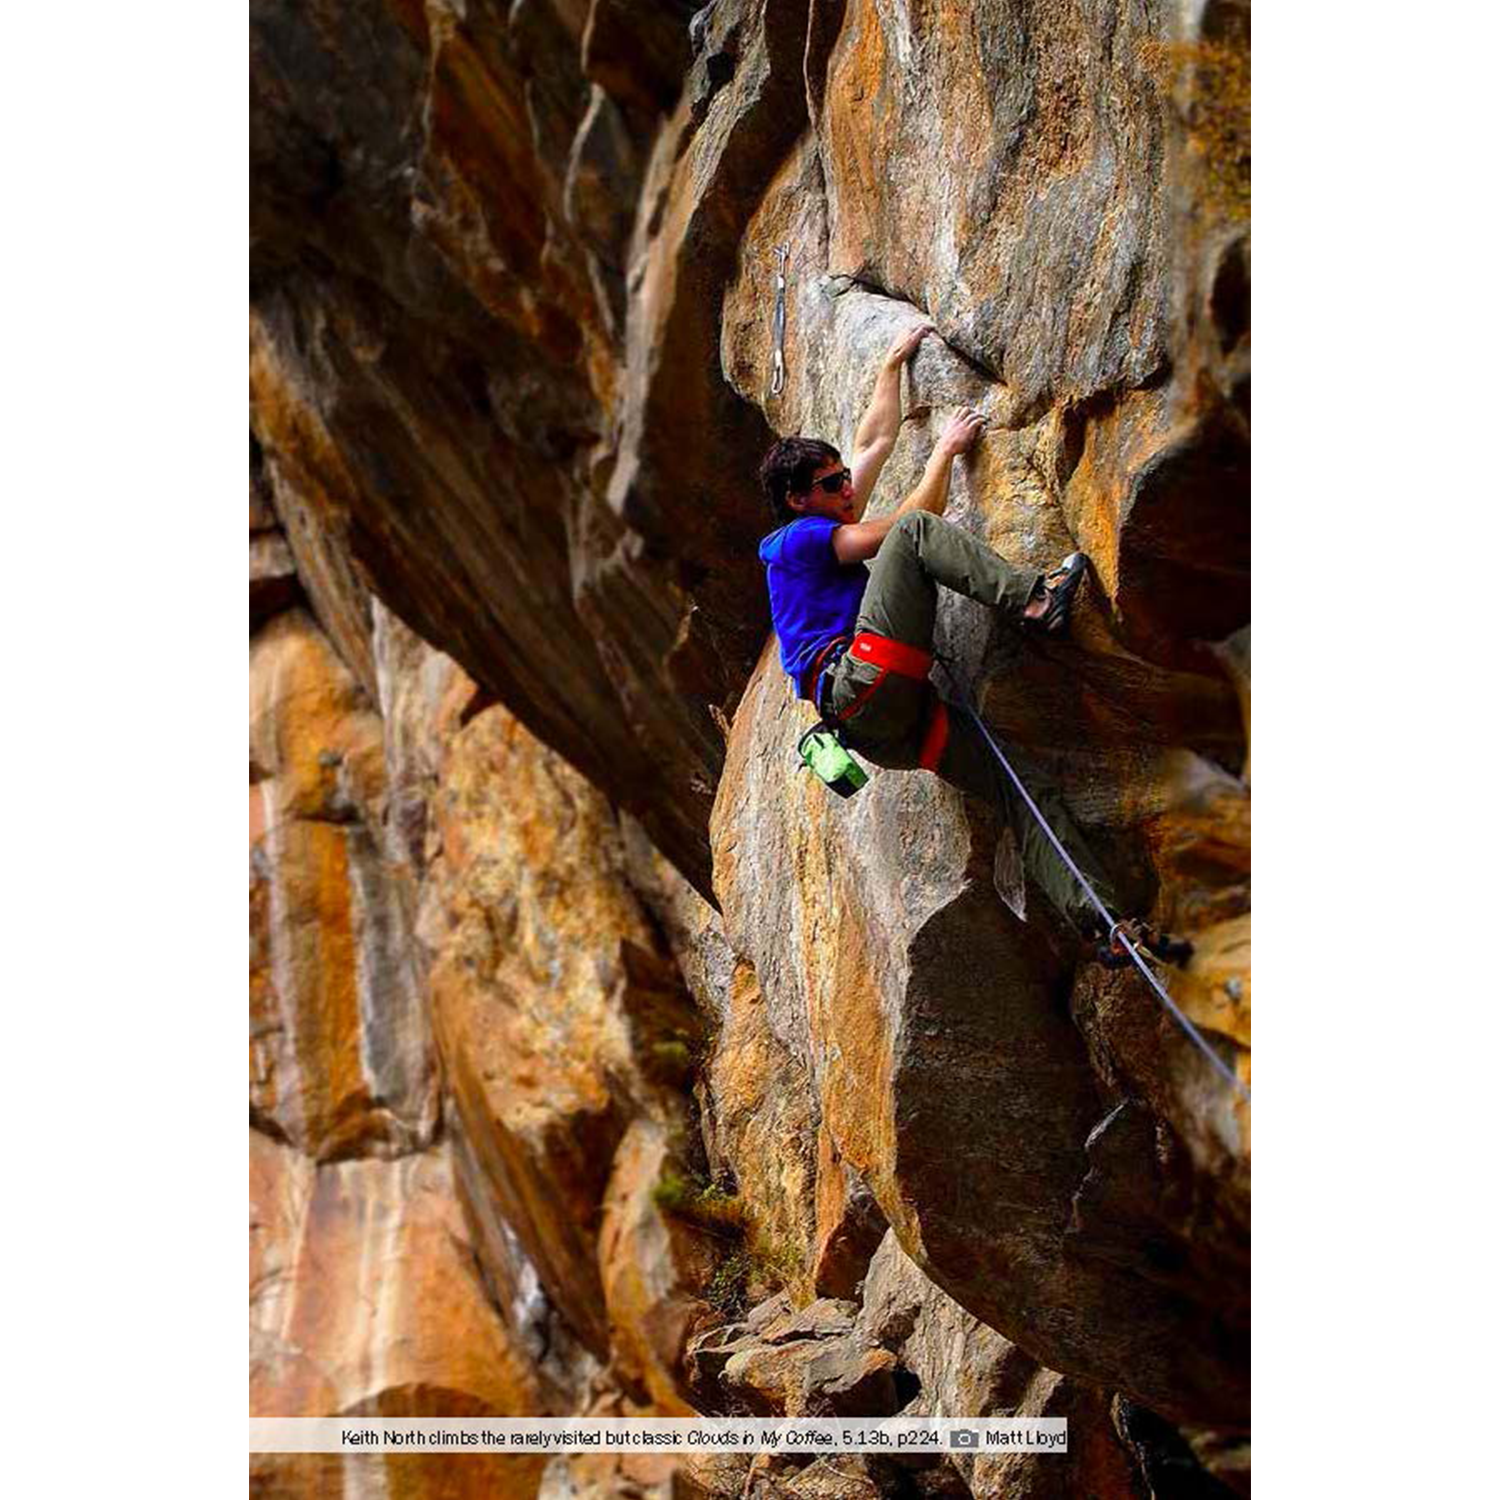 Rock Climbing Clear Creek Canyon, 3rd edition